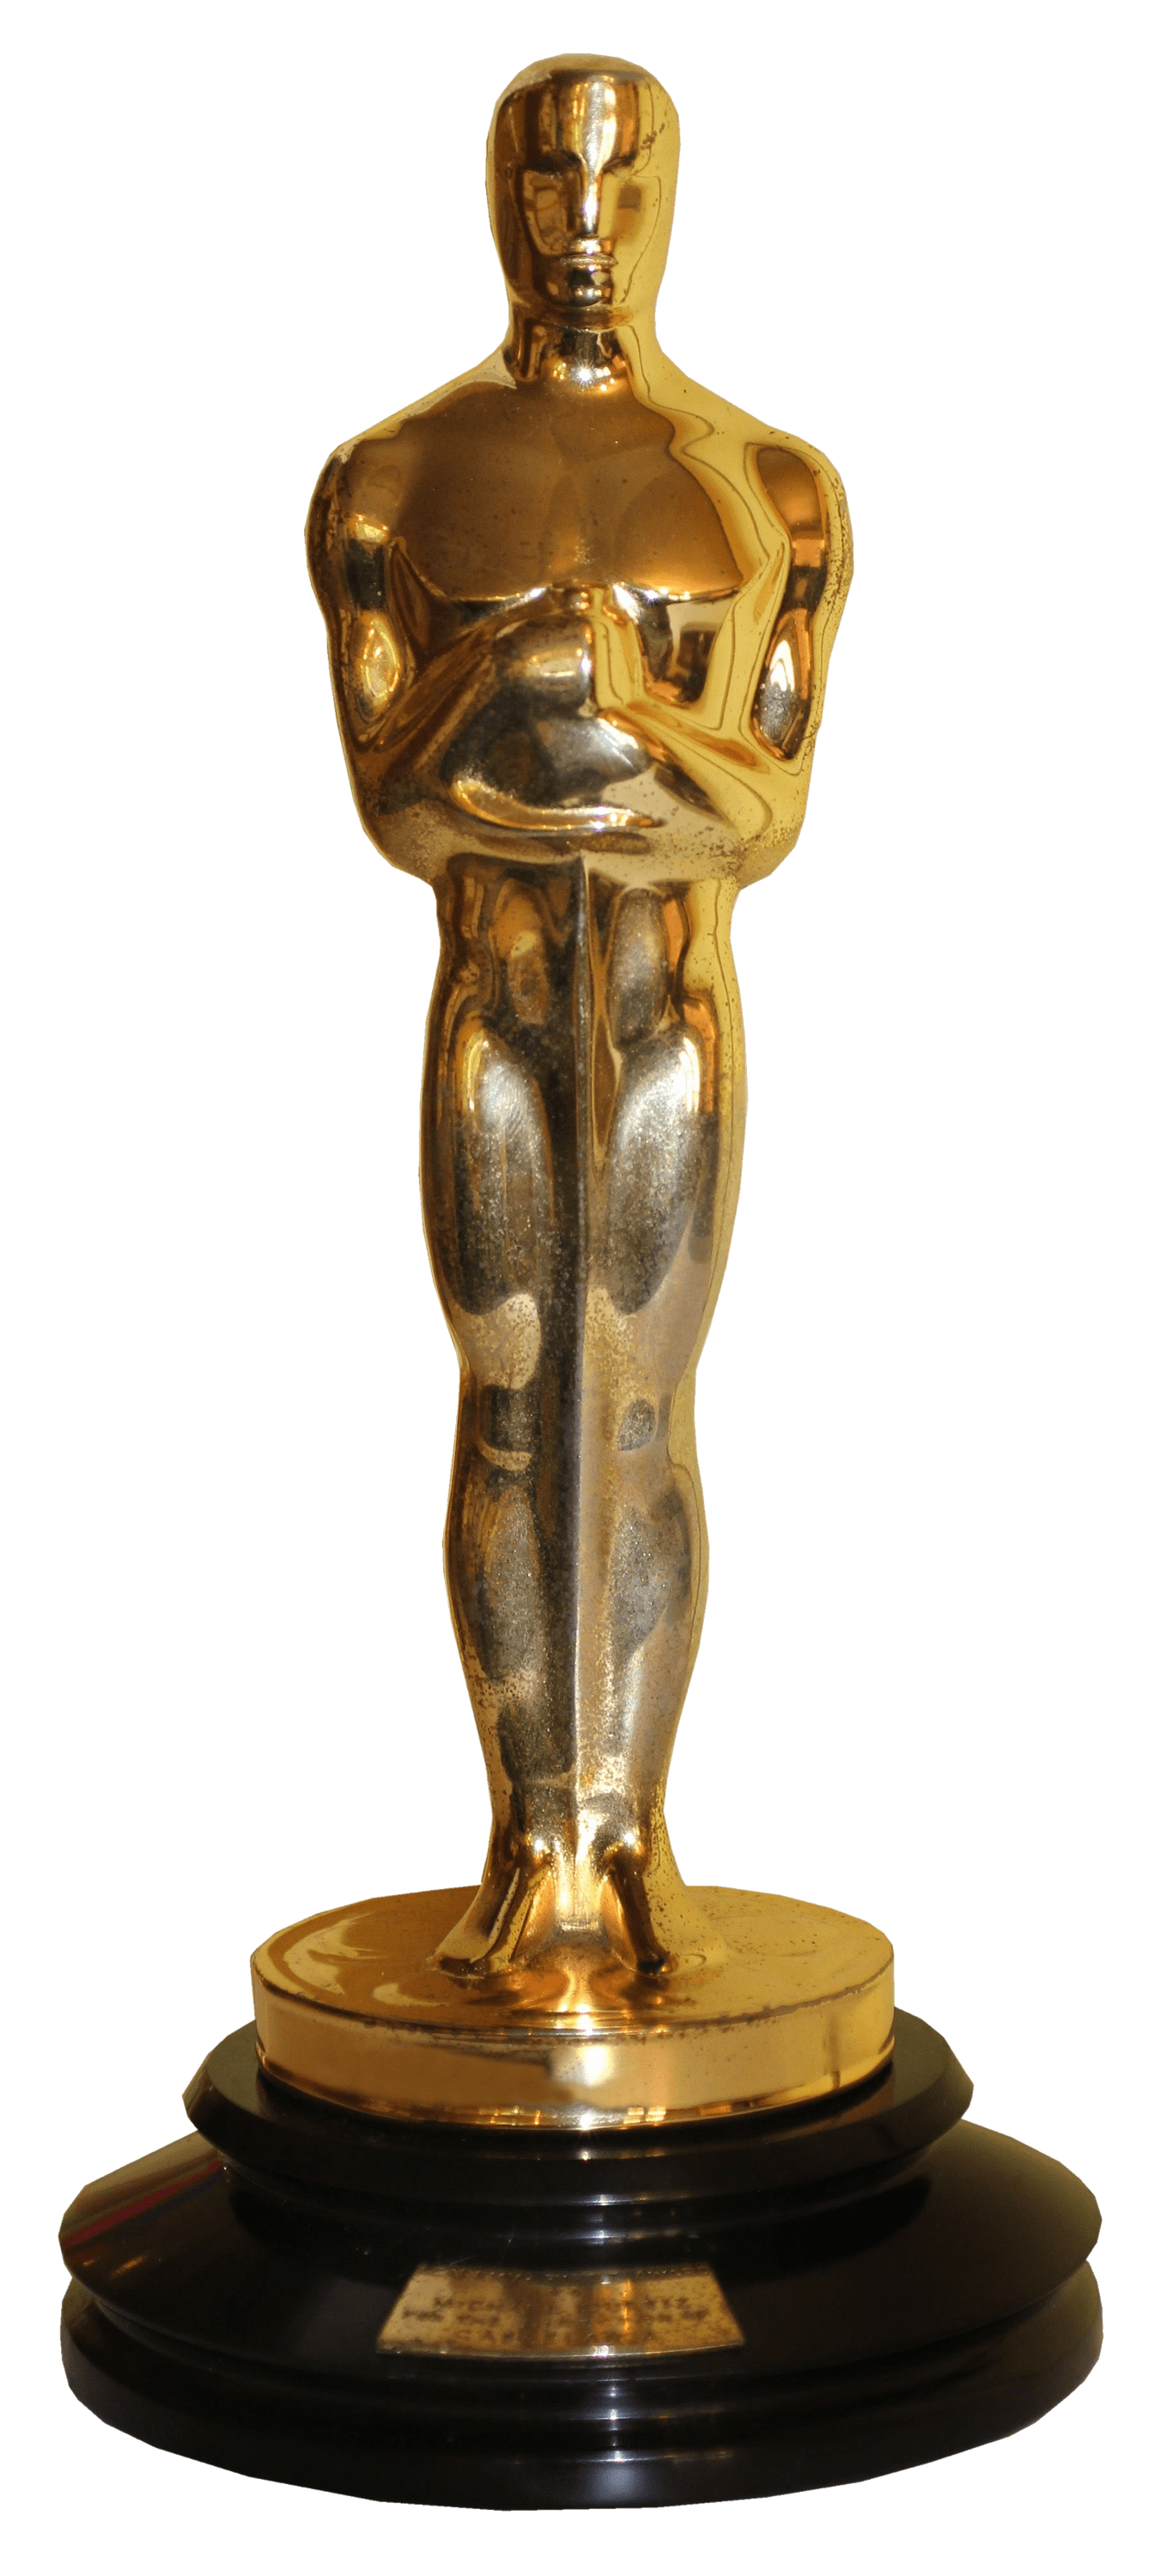 Oscar Award Trophy Png - Download, Transparent background PNG HD thumbnail